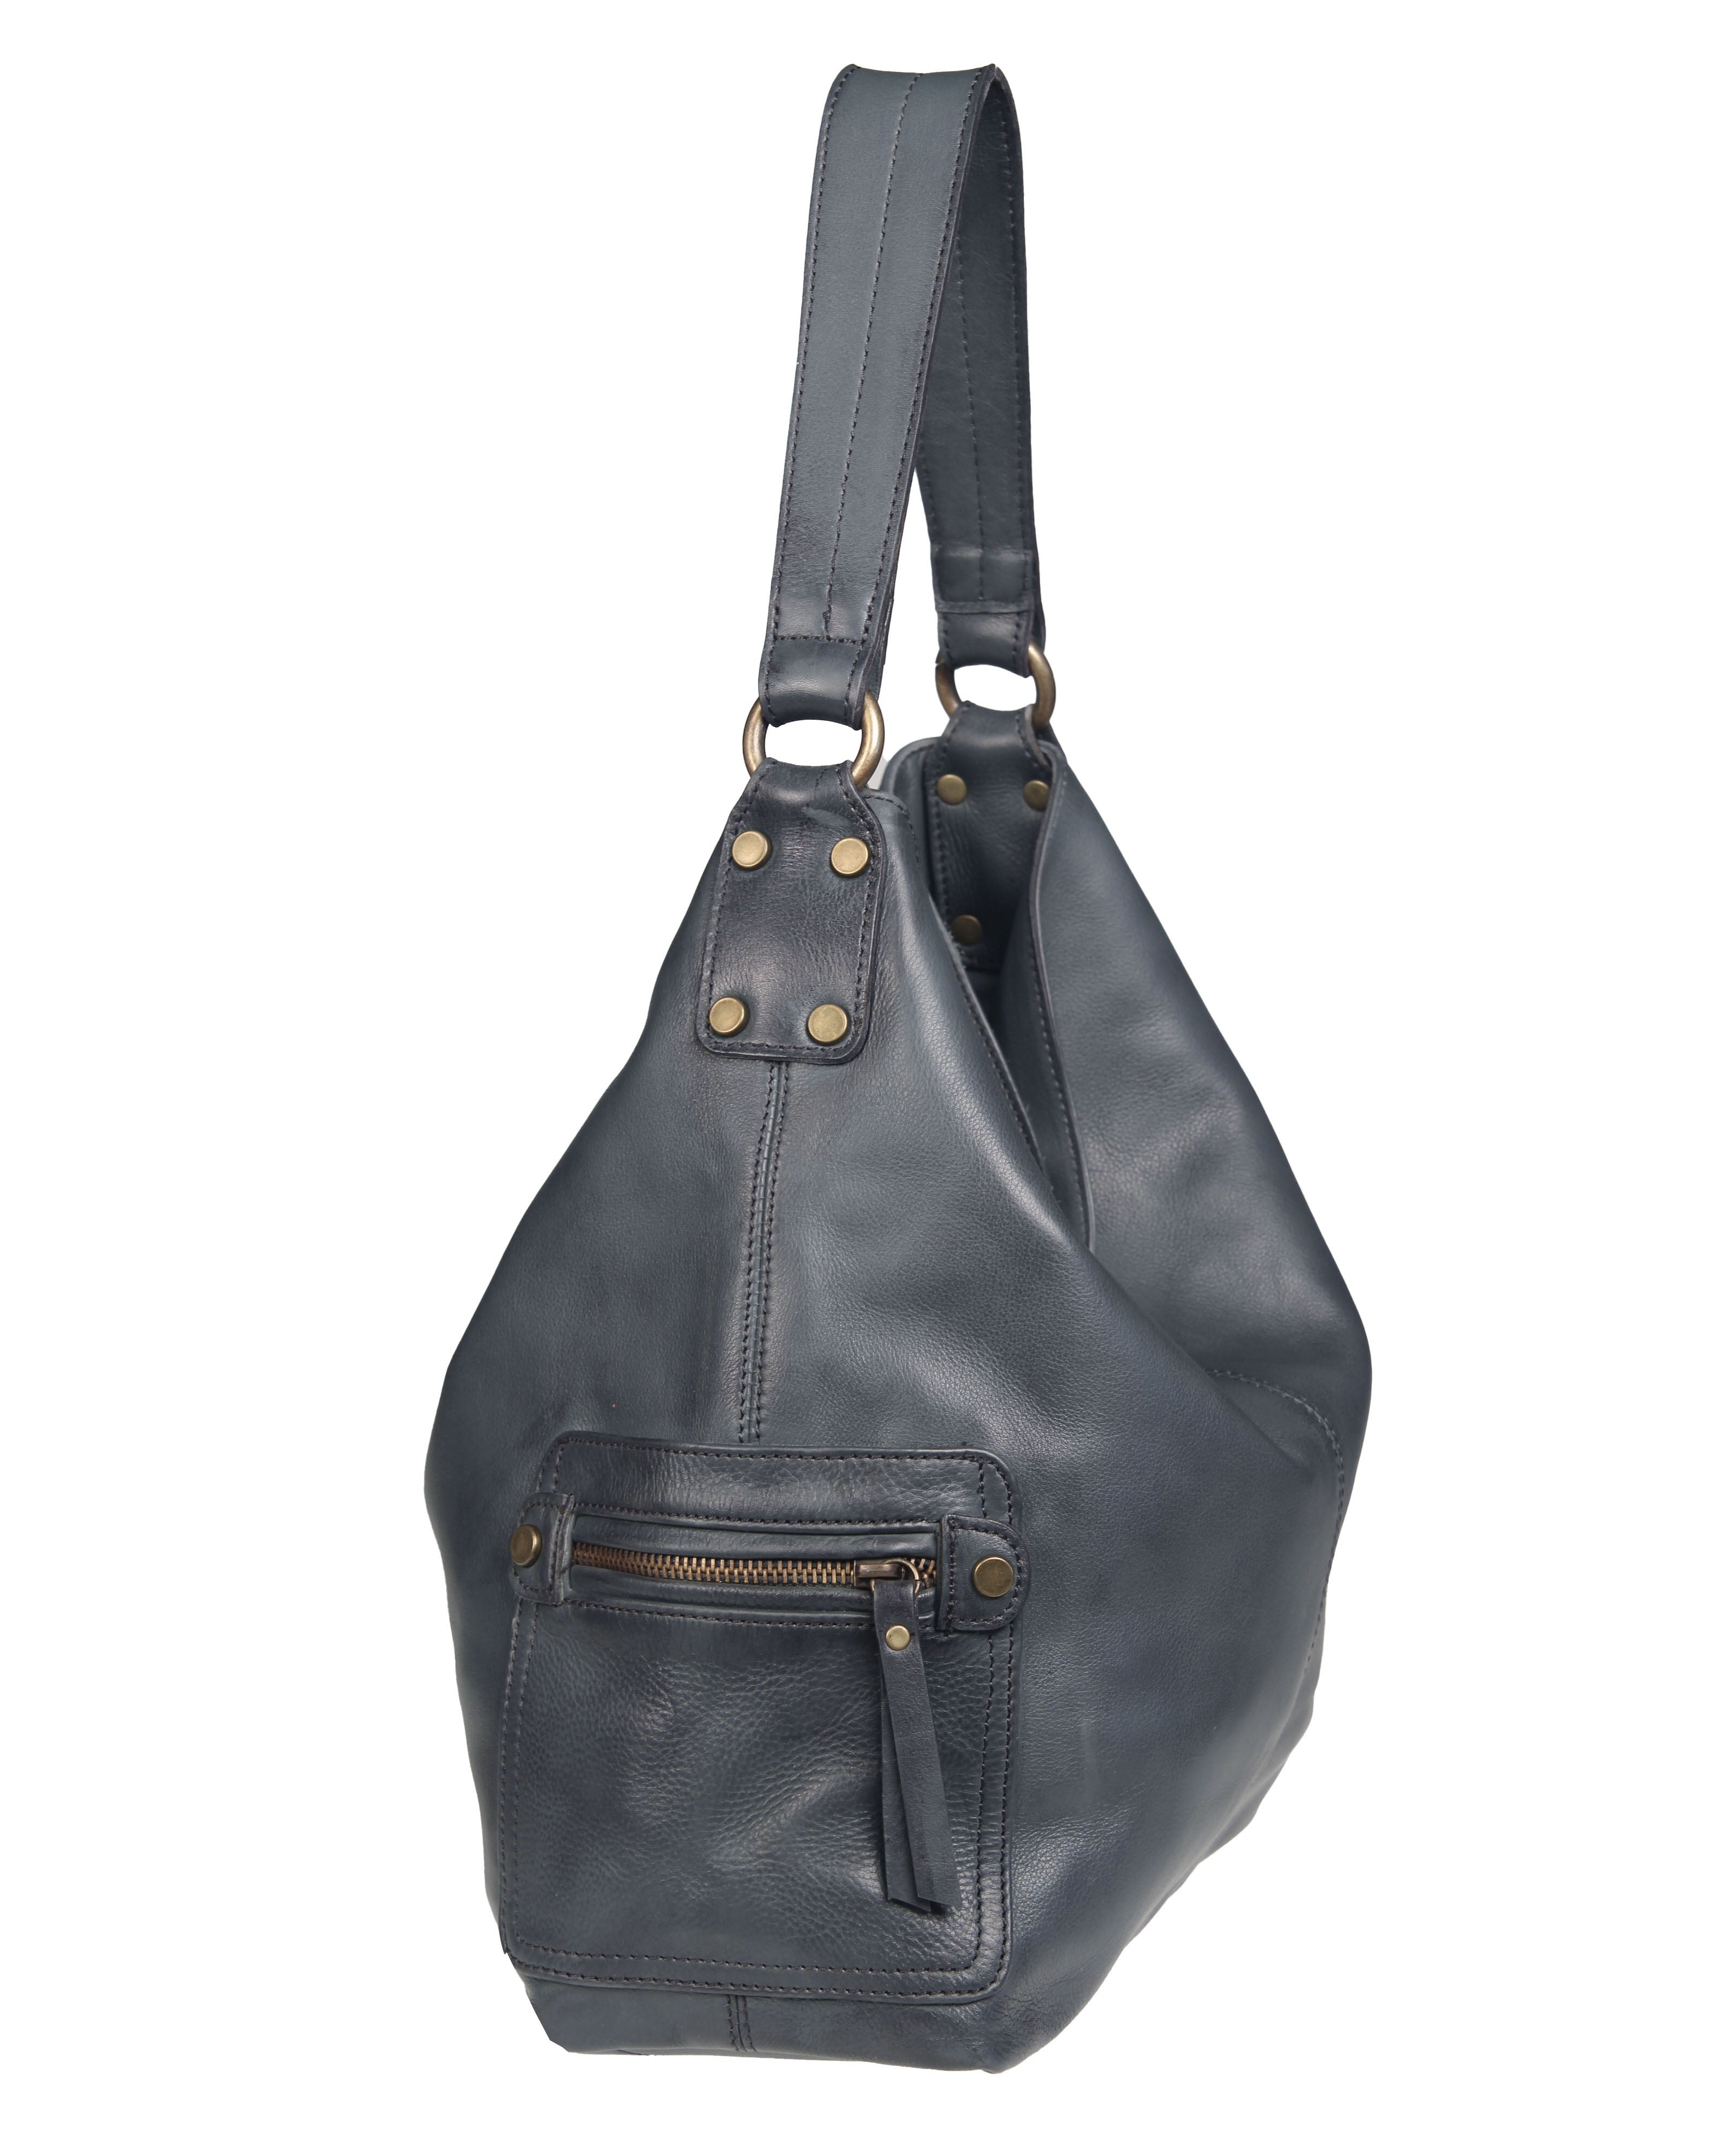 Elegant Bordeaux Leather Handbag with Italian Craftsmanship